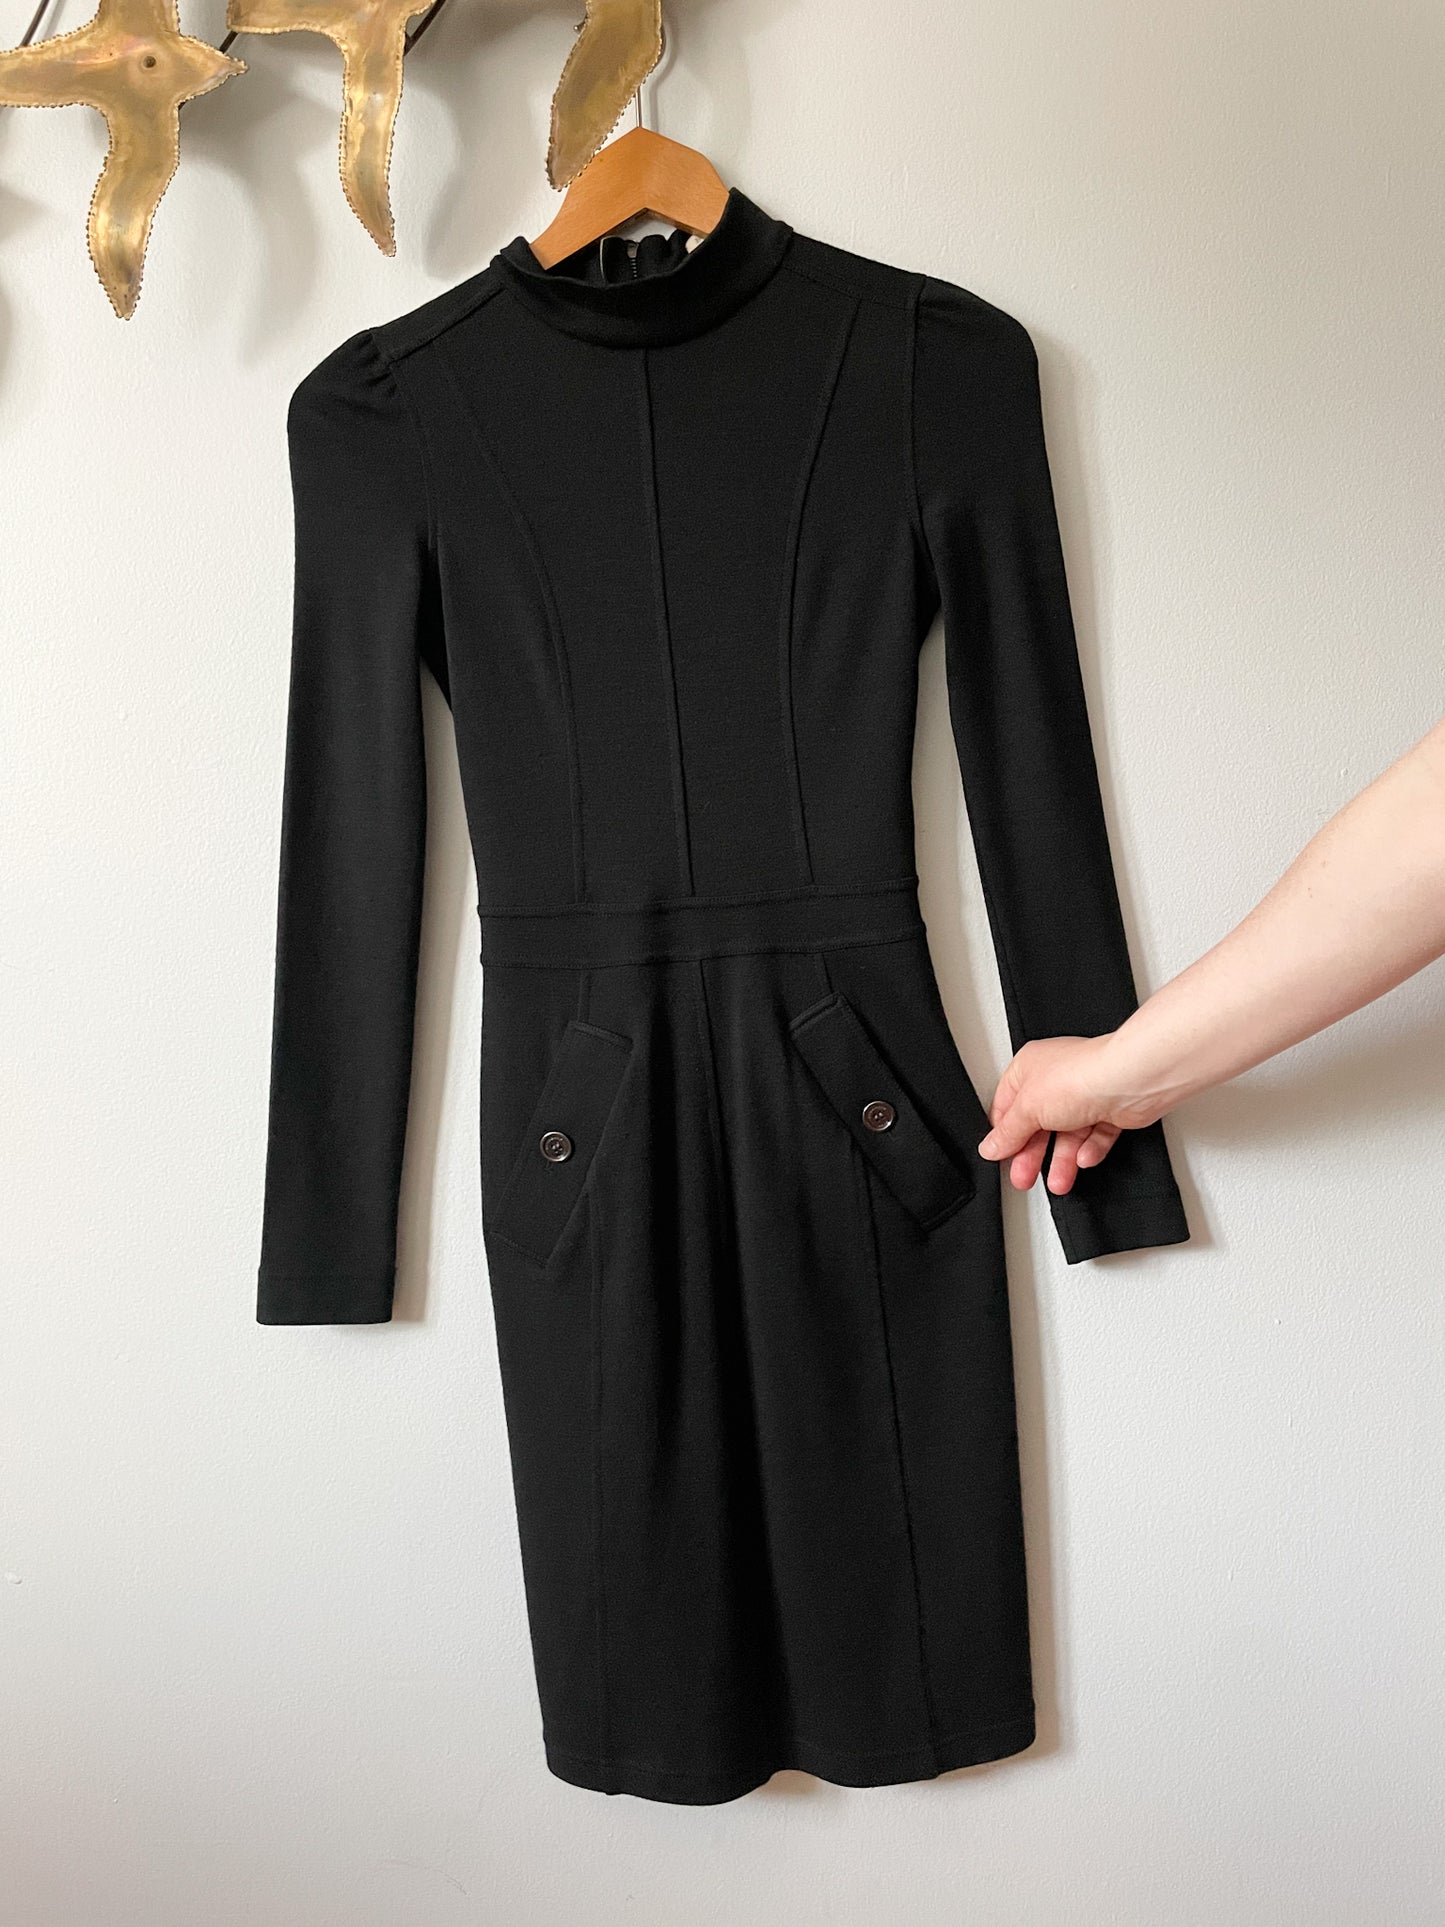 Burberry Brit Black Wool Mock Neck Knit Long Sleeve Dress - Size 2